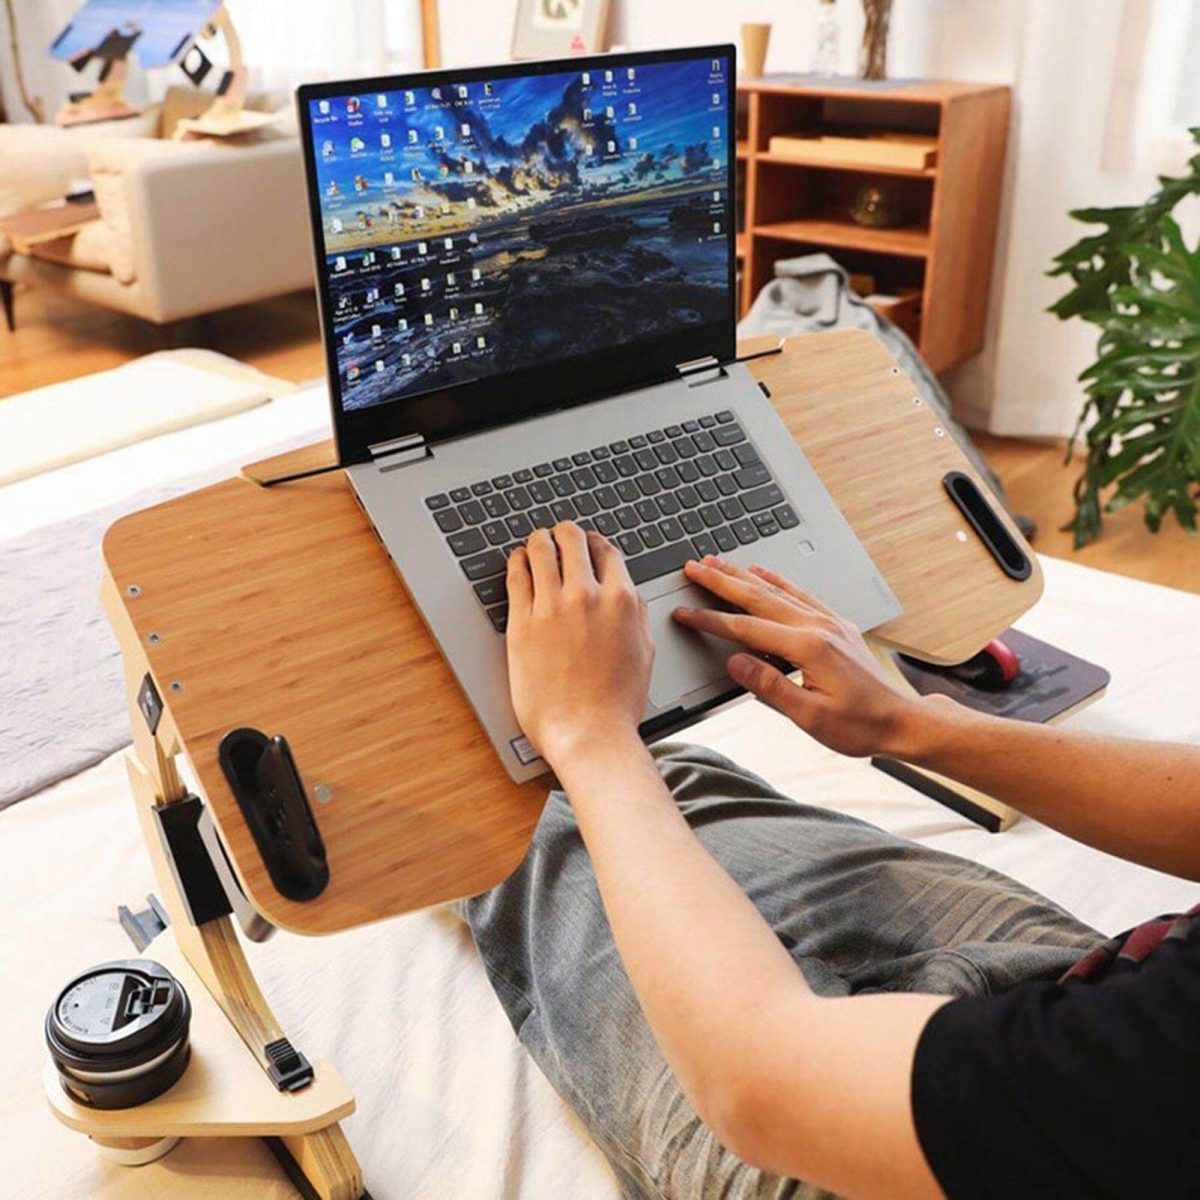 Adjustable Folding Laptop Bed Stand - MaviGadget